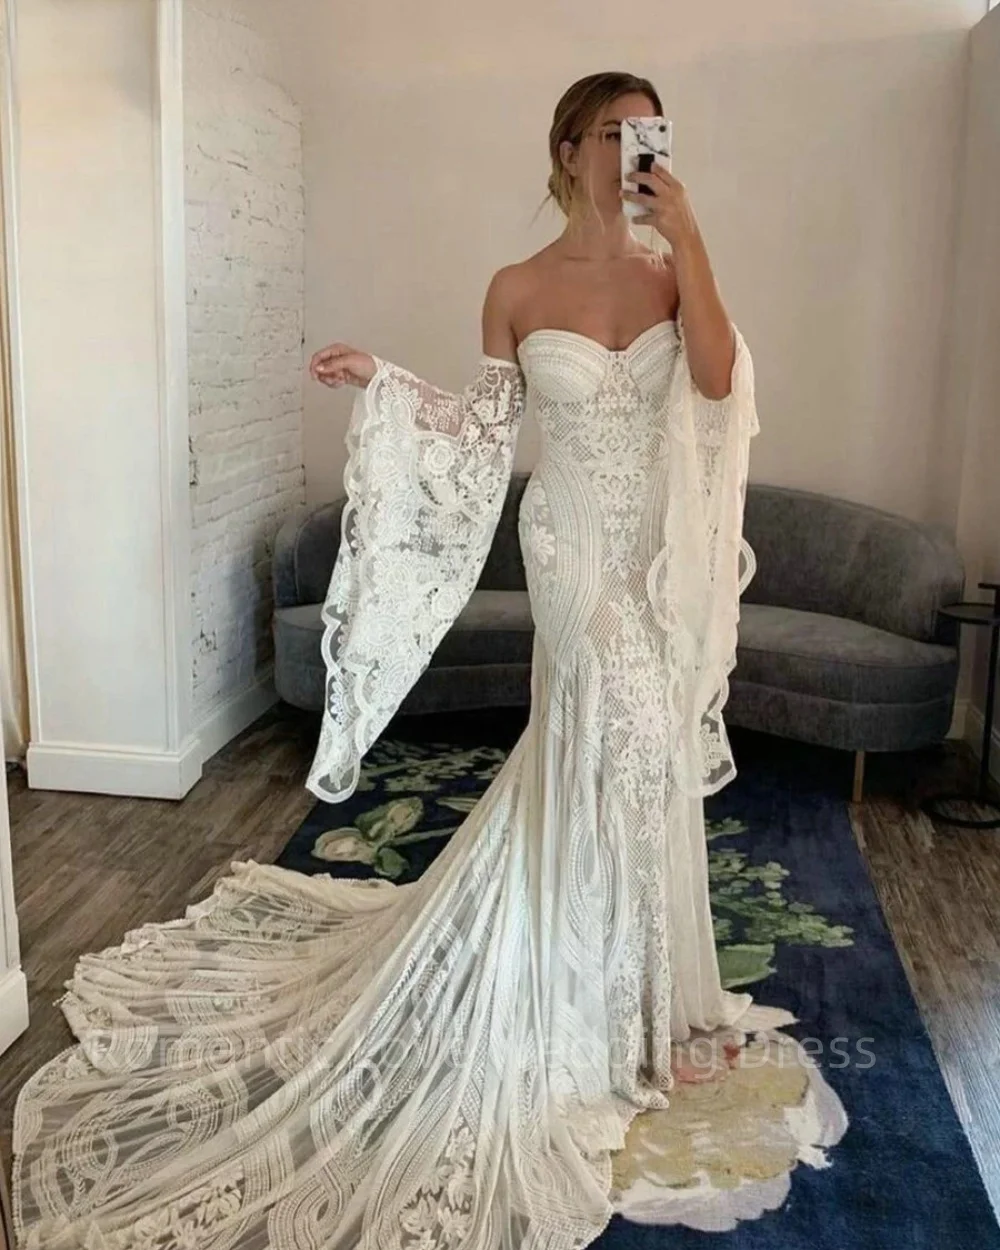 

Strapless Sexy Mermaid White Wedding Dress Off The Shoulder Lace Applique Lace up Back Bridal Gowns For Women Vestido De Novia